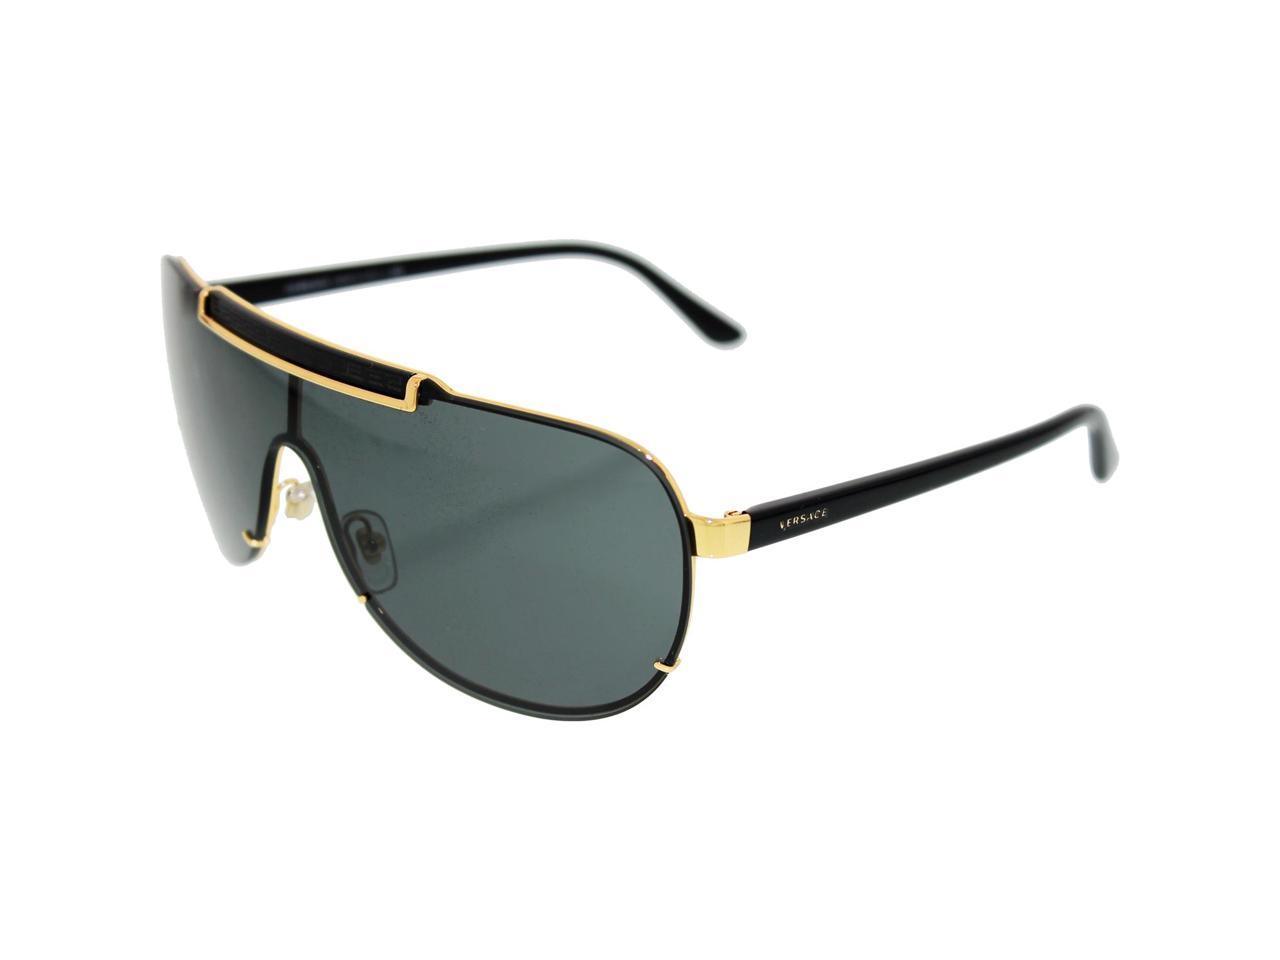 versace sunglasses model 2140